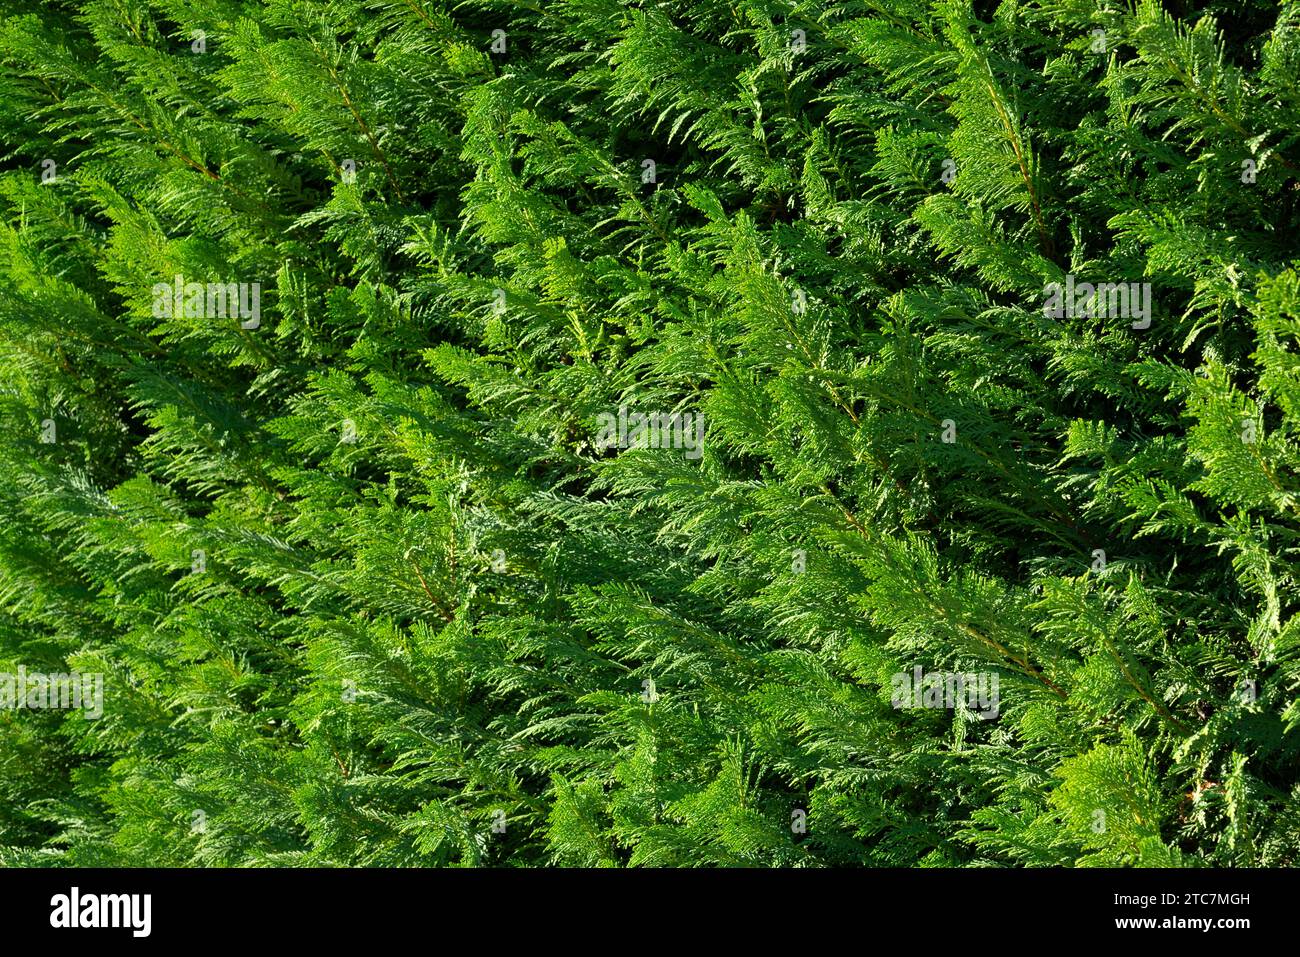 Italy, Lombardy, Lawson Cypress Hedge, Chamaecyparis Lawsoniana Stock Photo